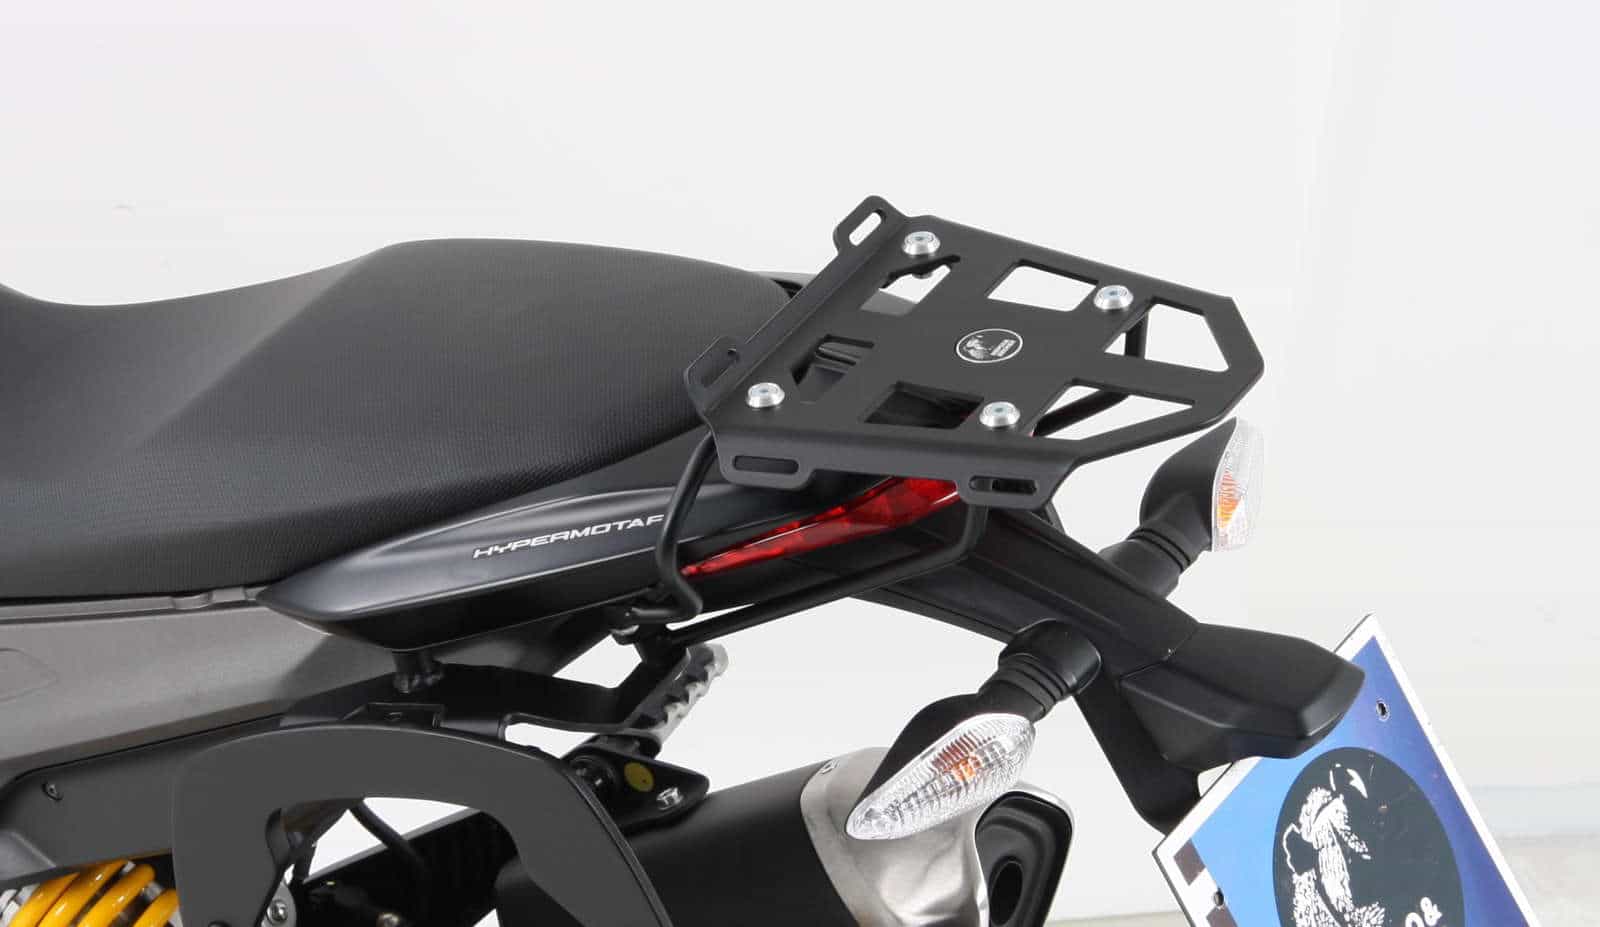 Minirack soft luggage rear rack for Ducati Hypermotard 939/SP (2016-2018)